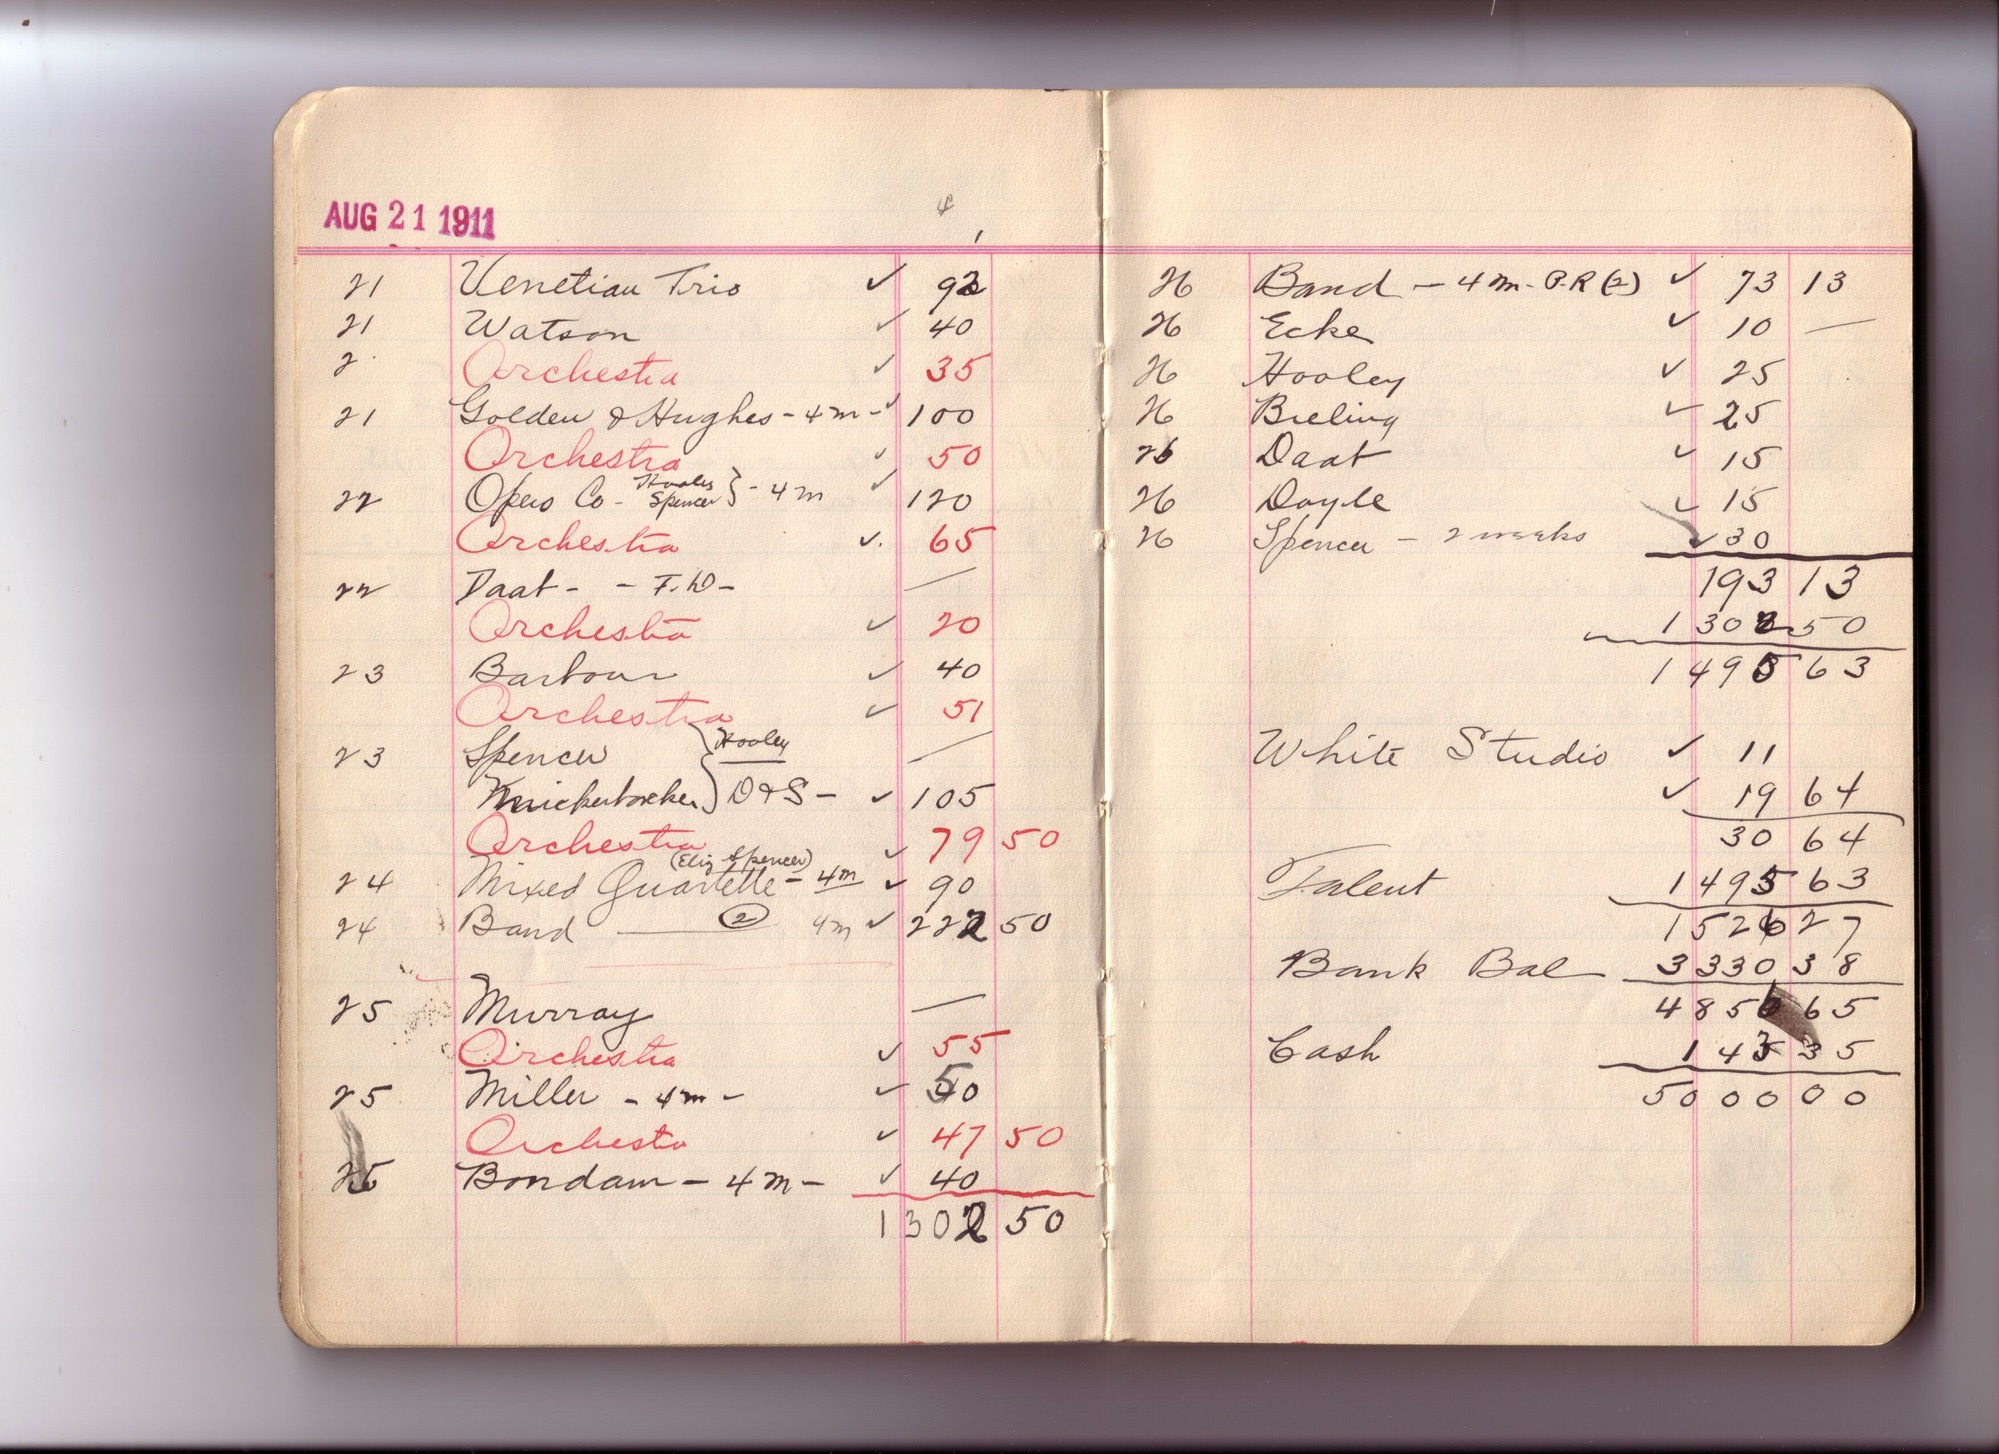 Thomas Edison's New York City Recording Studio Cash Book 08 (of 21), Image 05 (of 49).